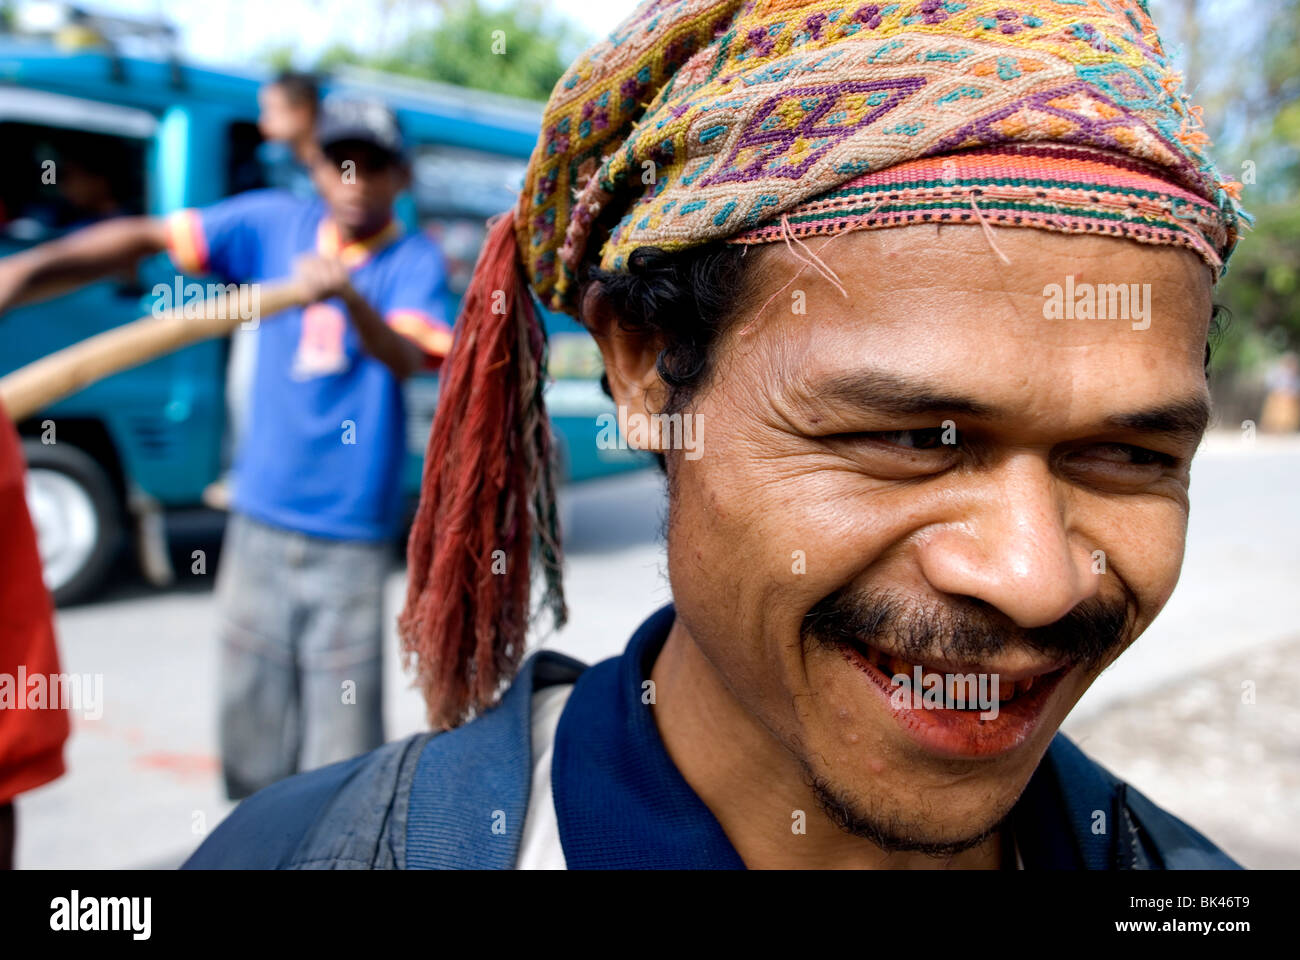 ketum man near kupang, west timor, indonesia Stock Photo